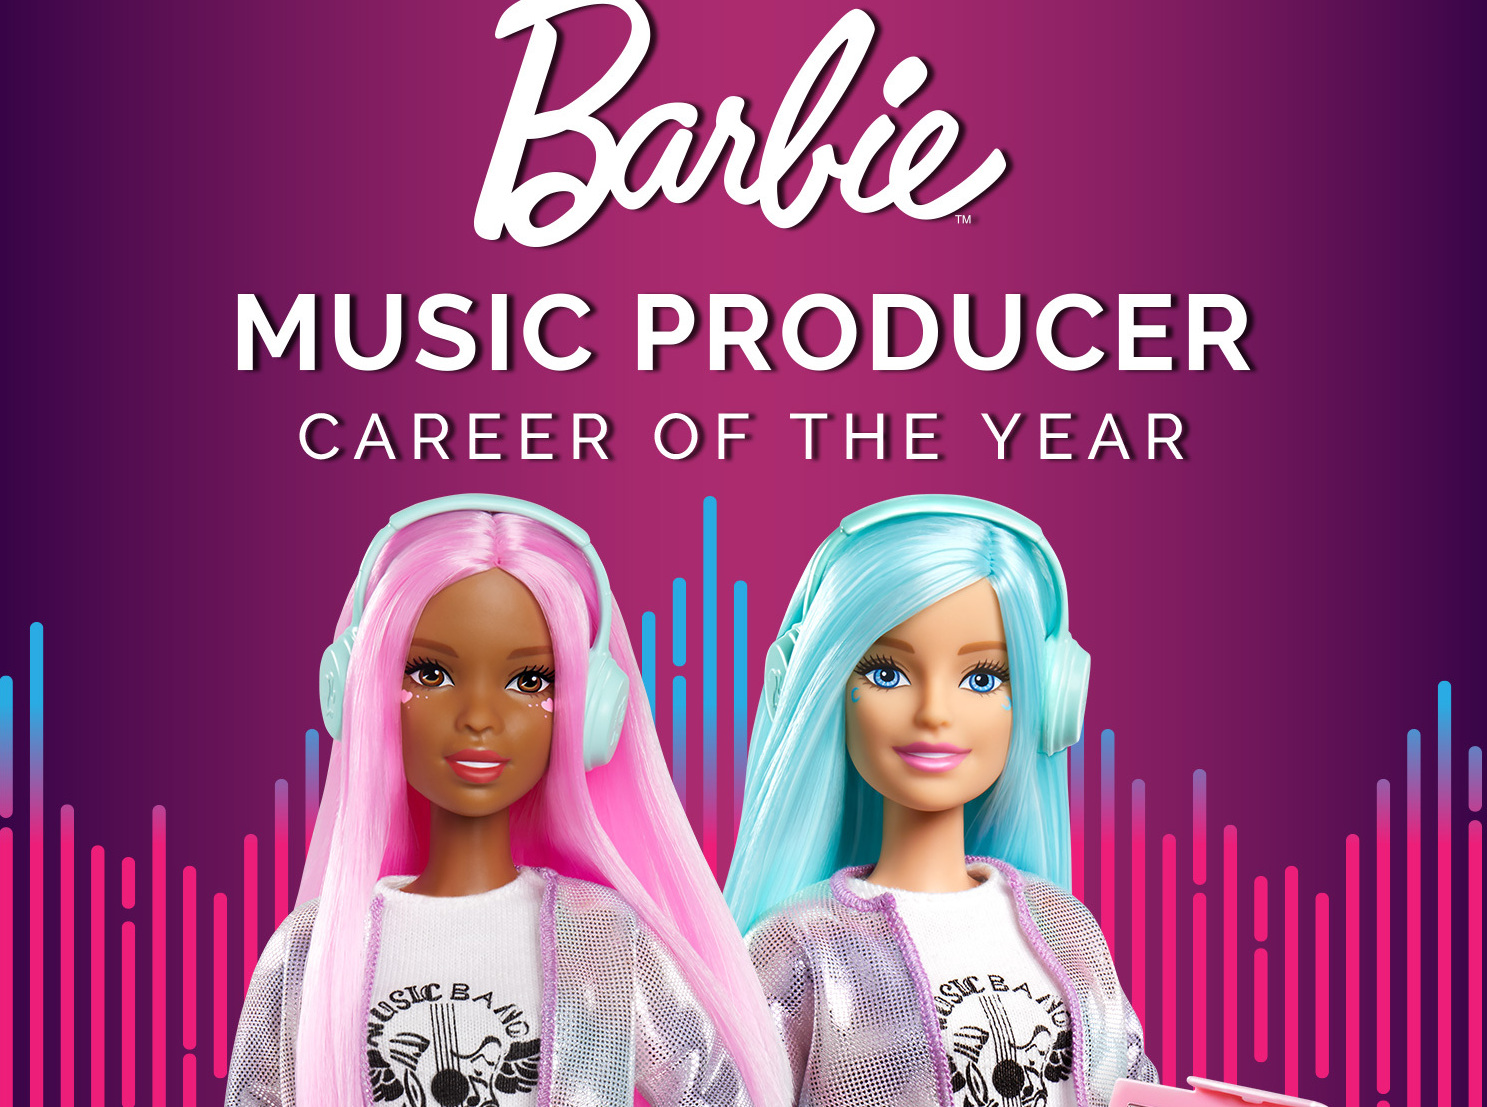 jas Leia mogelijkheid Mattel launches new career Barbie to highlight gender gap in music industry  - pennlive.com